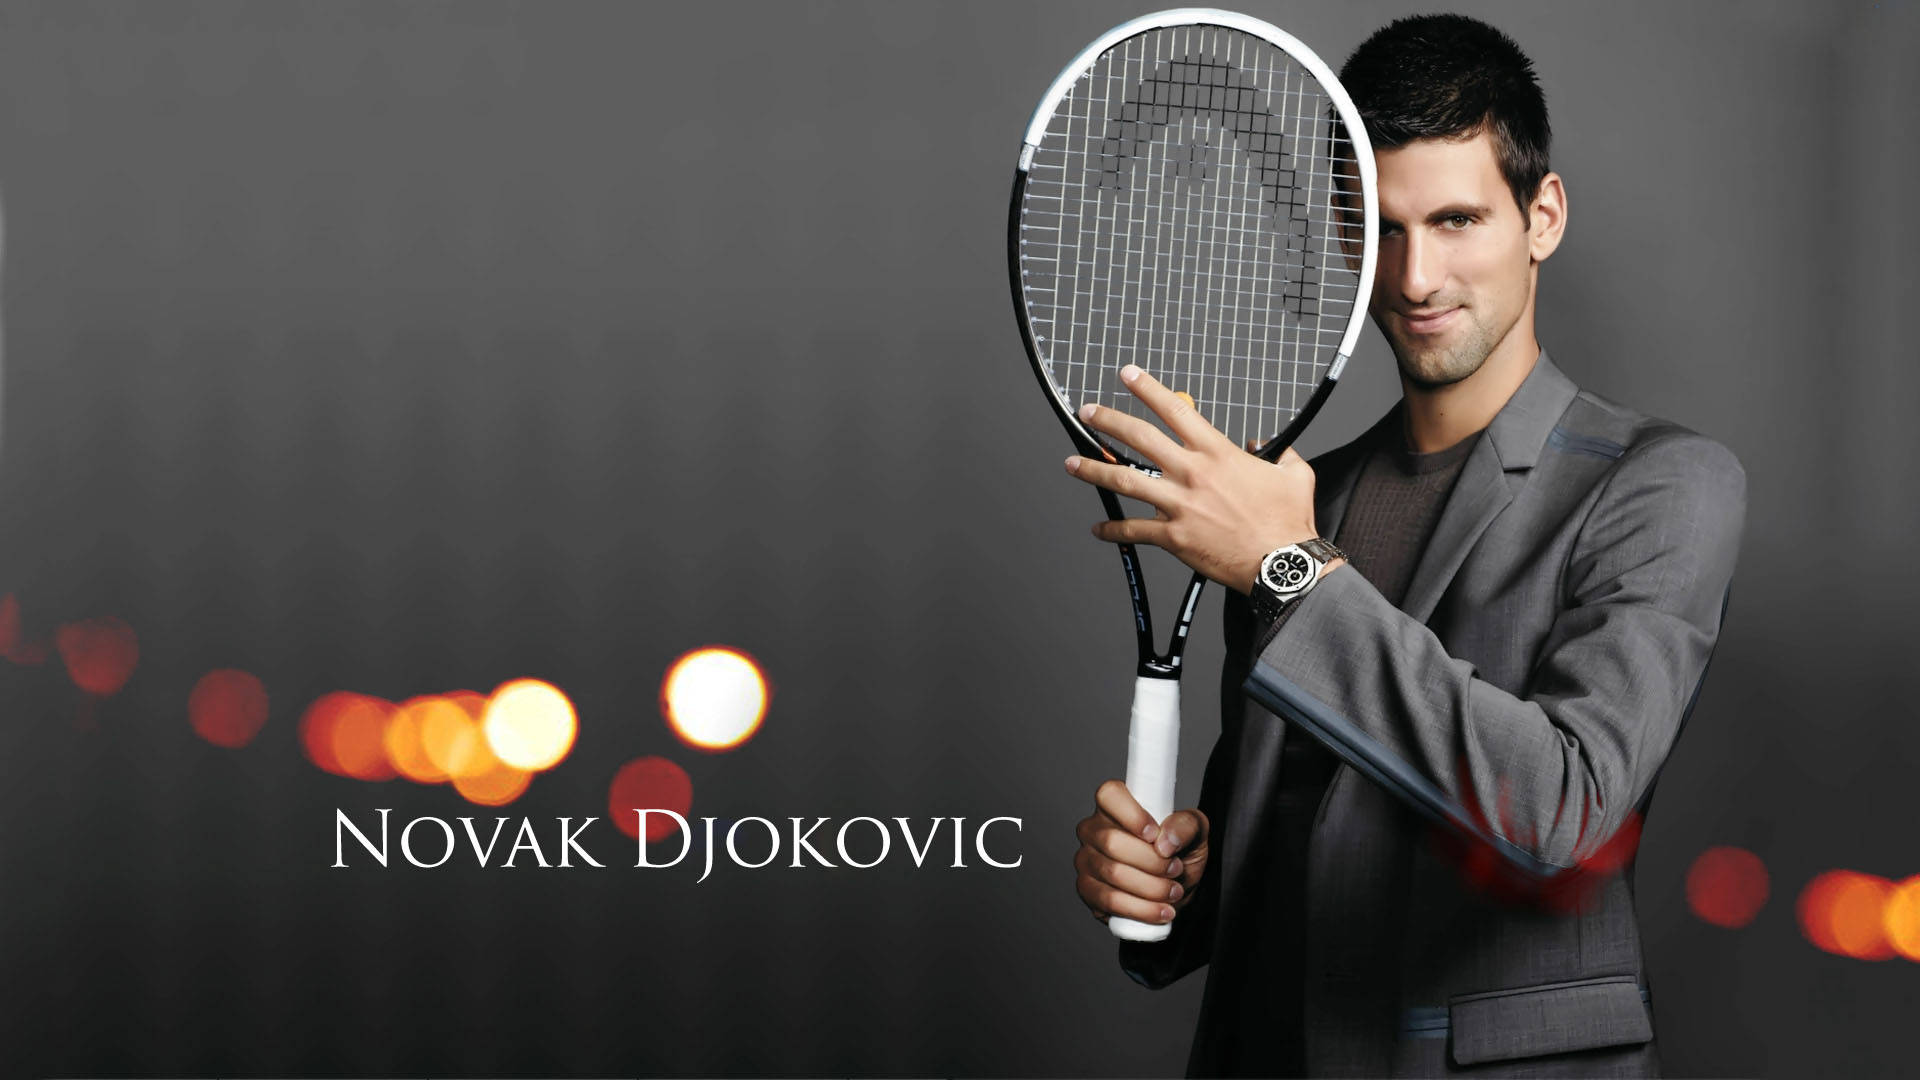 Novak Djokovic Wallpaper Images